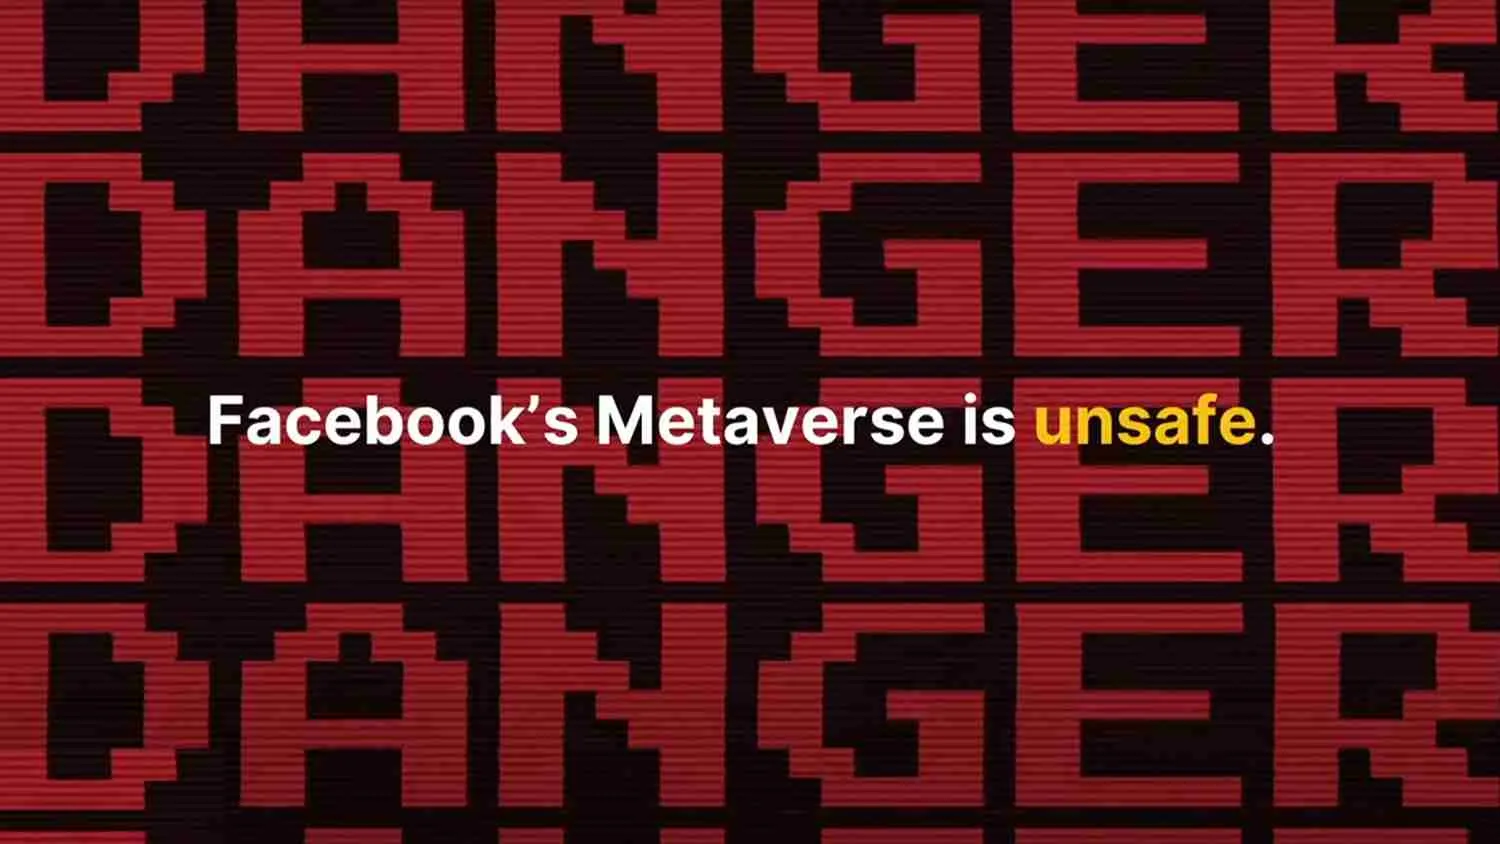 screenshot from linked video - DANGER - text onscreen: "Facebook's Metaverse is unsafe"